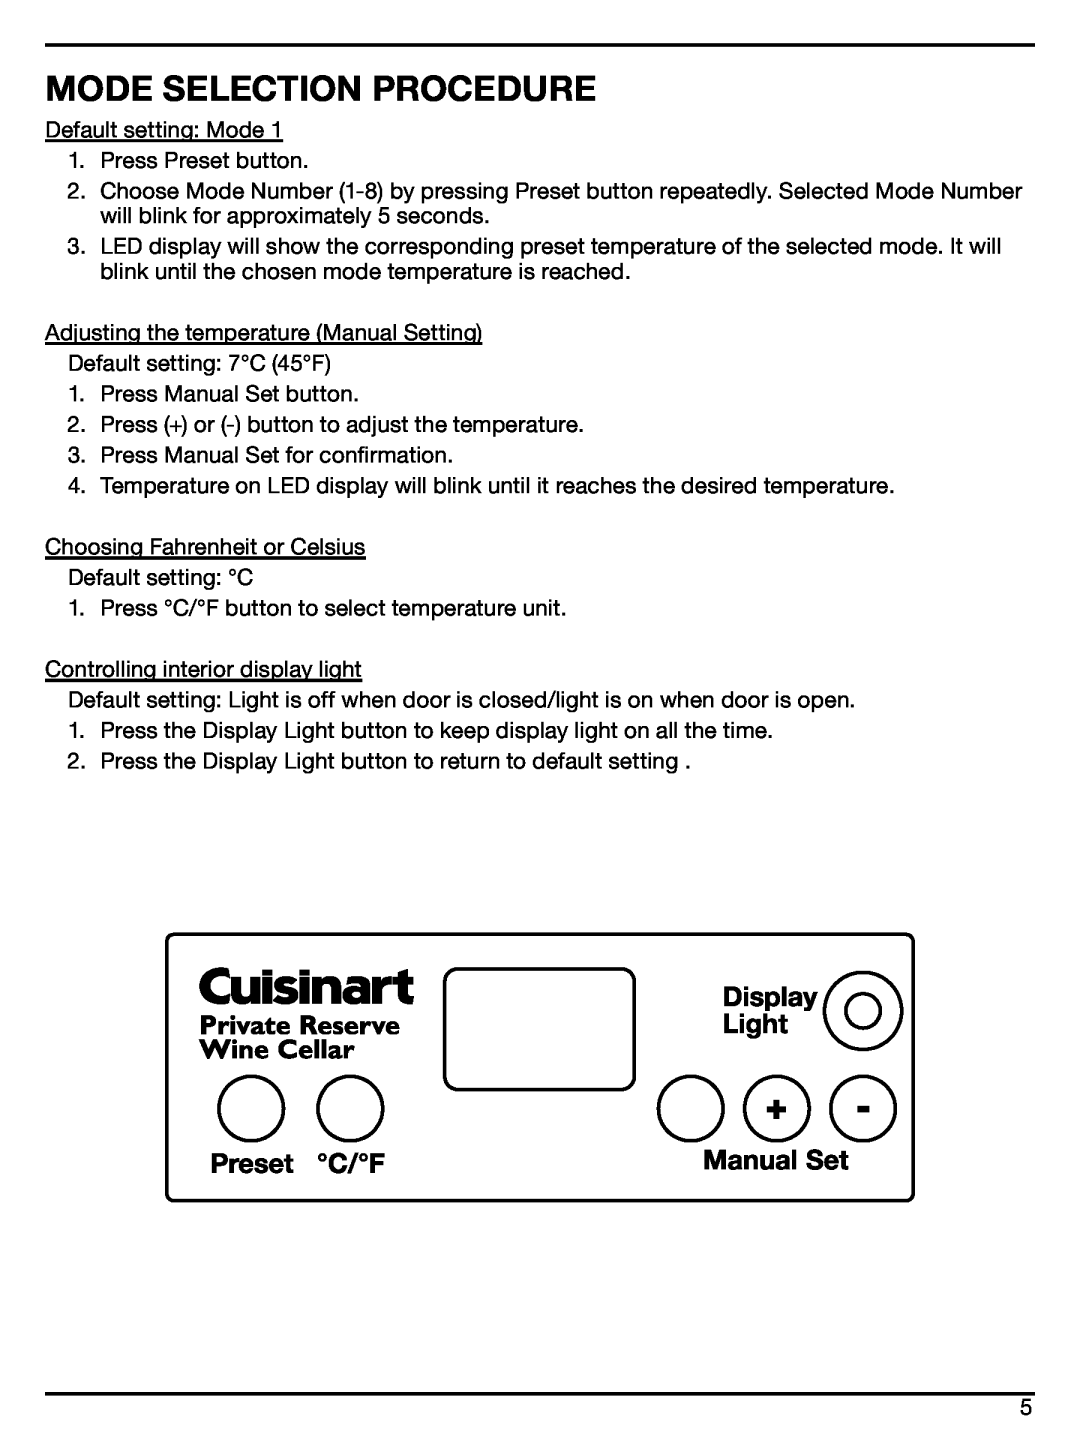 Cuisinart CWC-600 manual Mode selection procedure 